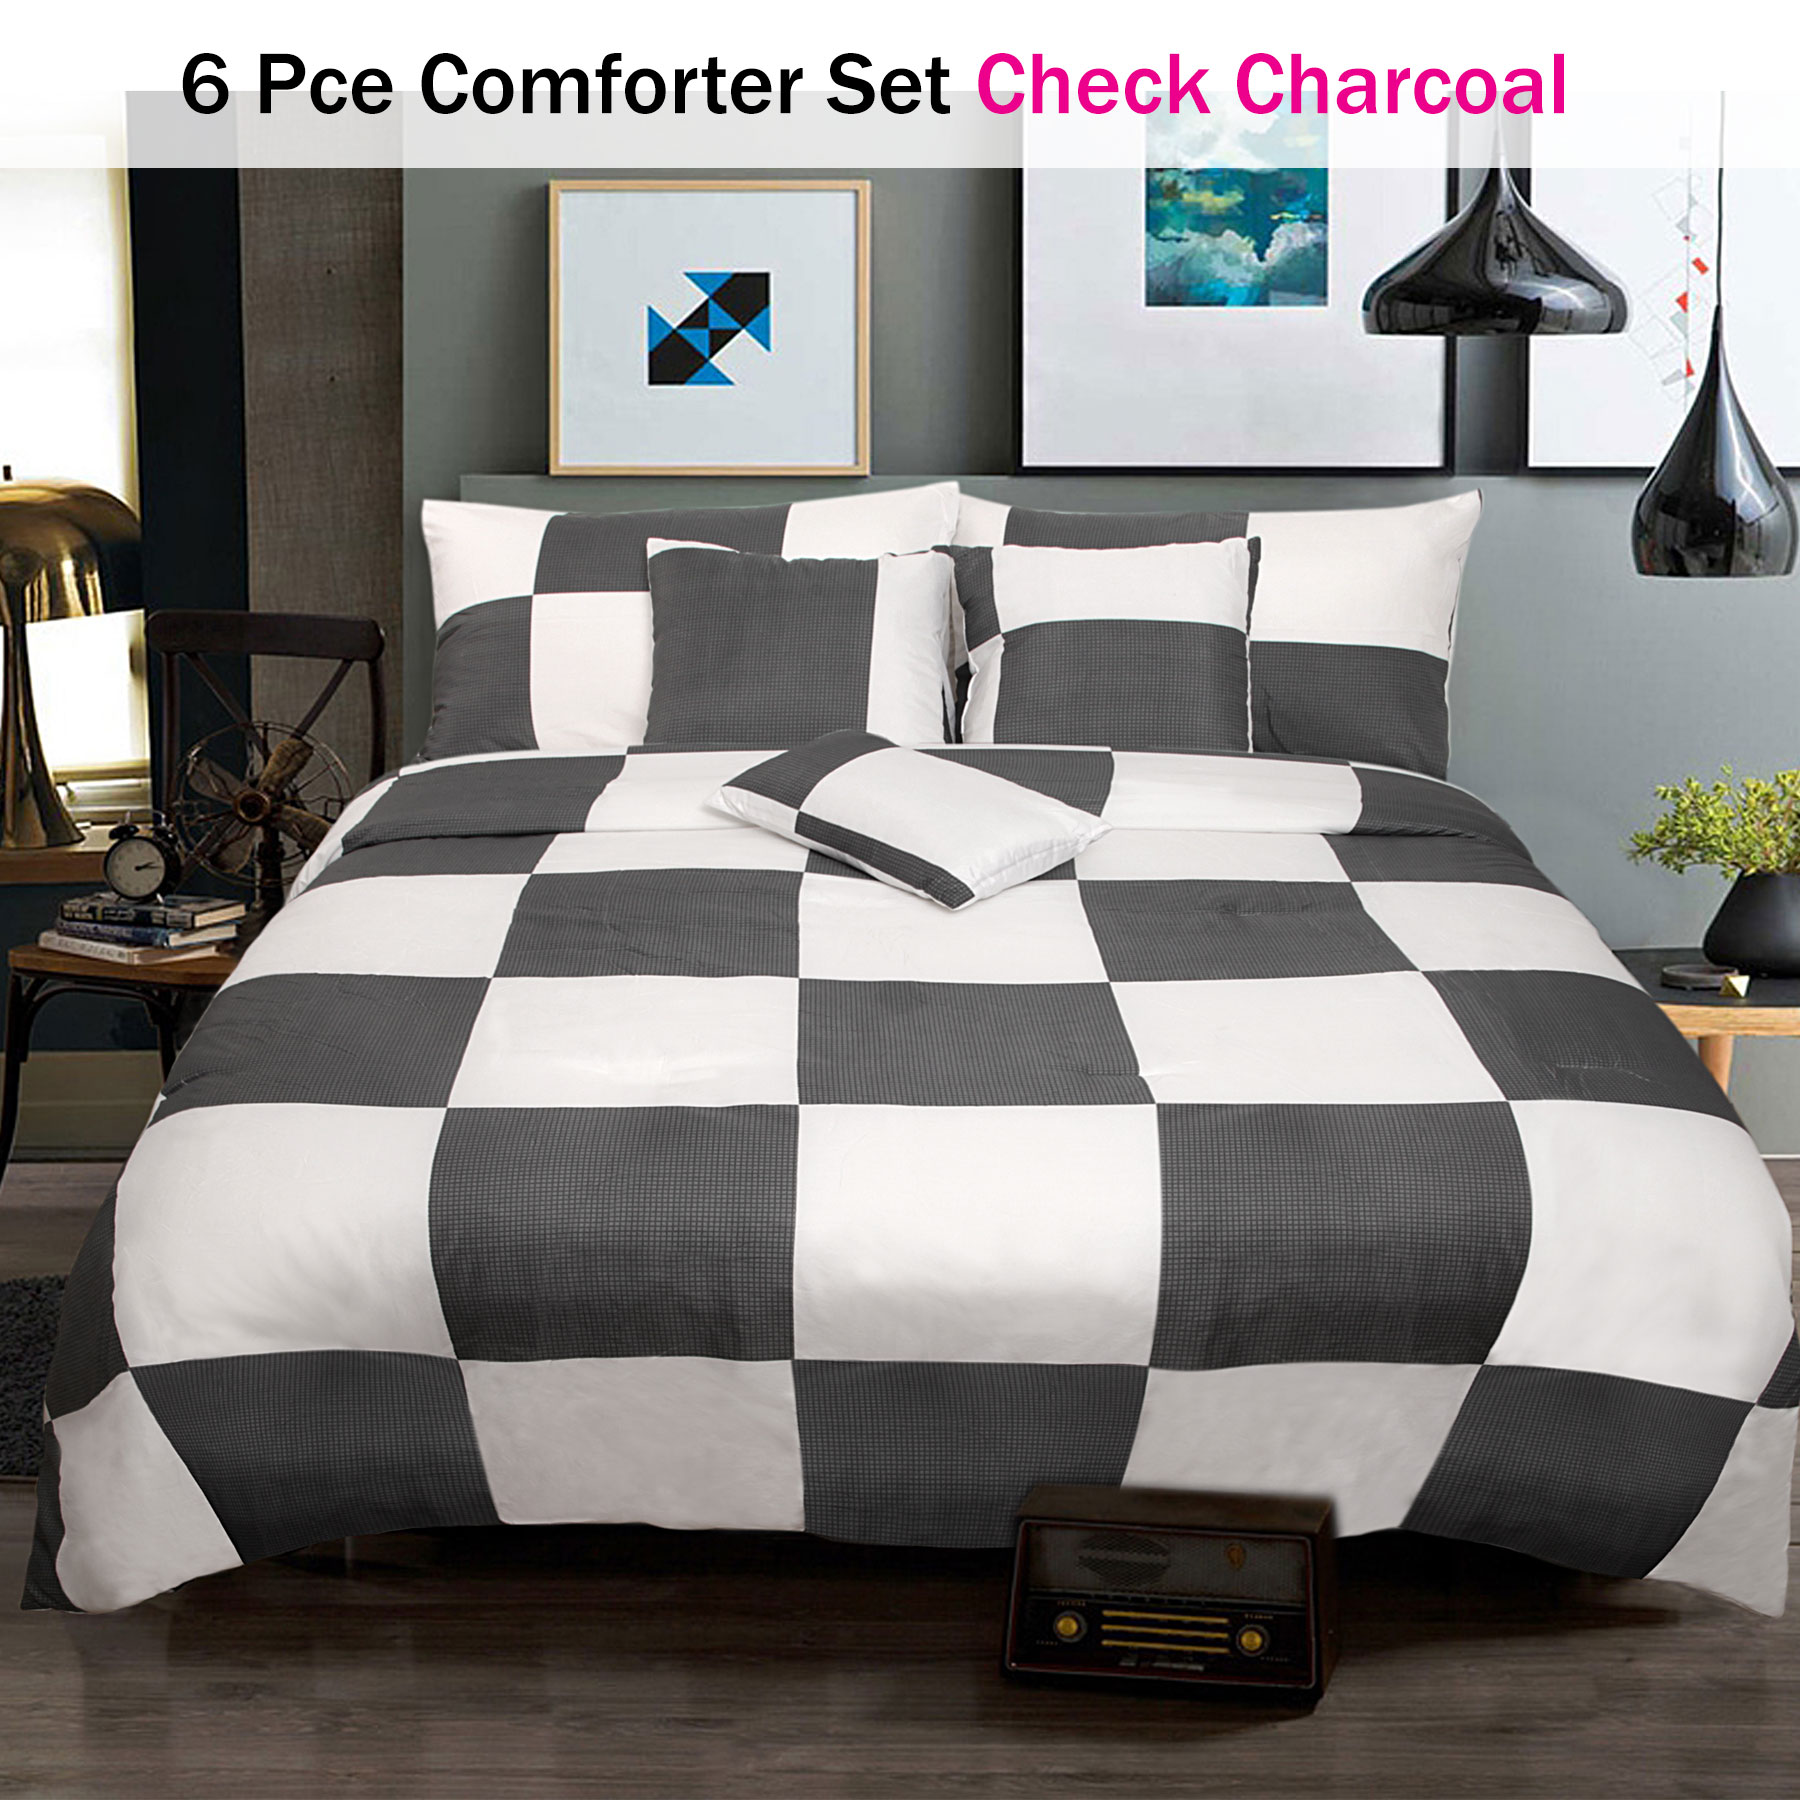 6 Pce - QUEEN Comforter Check Charcoal + 2 Pcases + 3 Cushions Shangri La